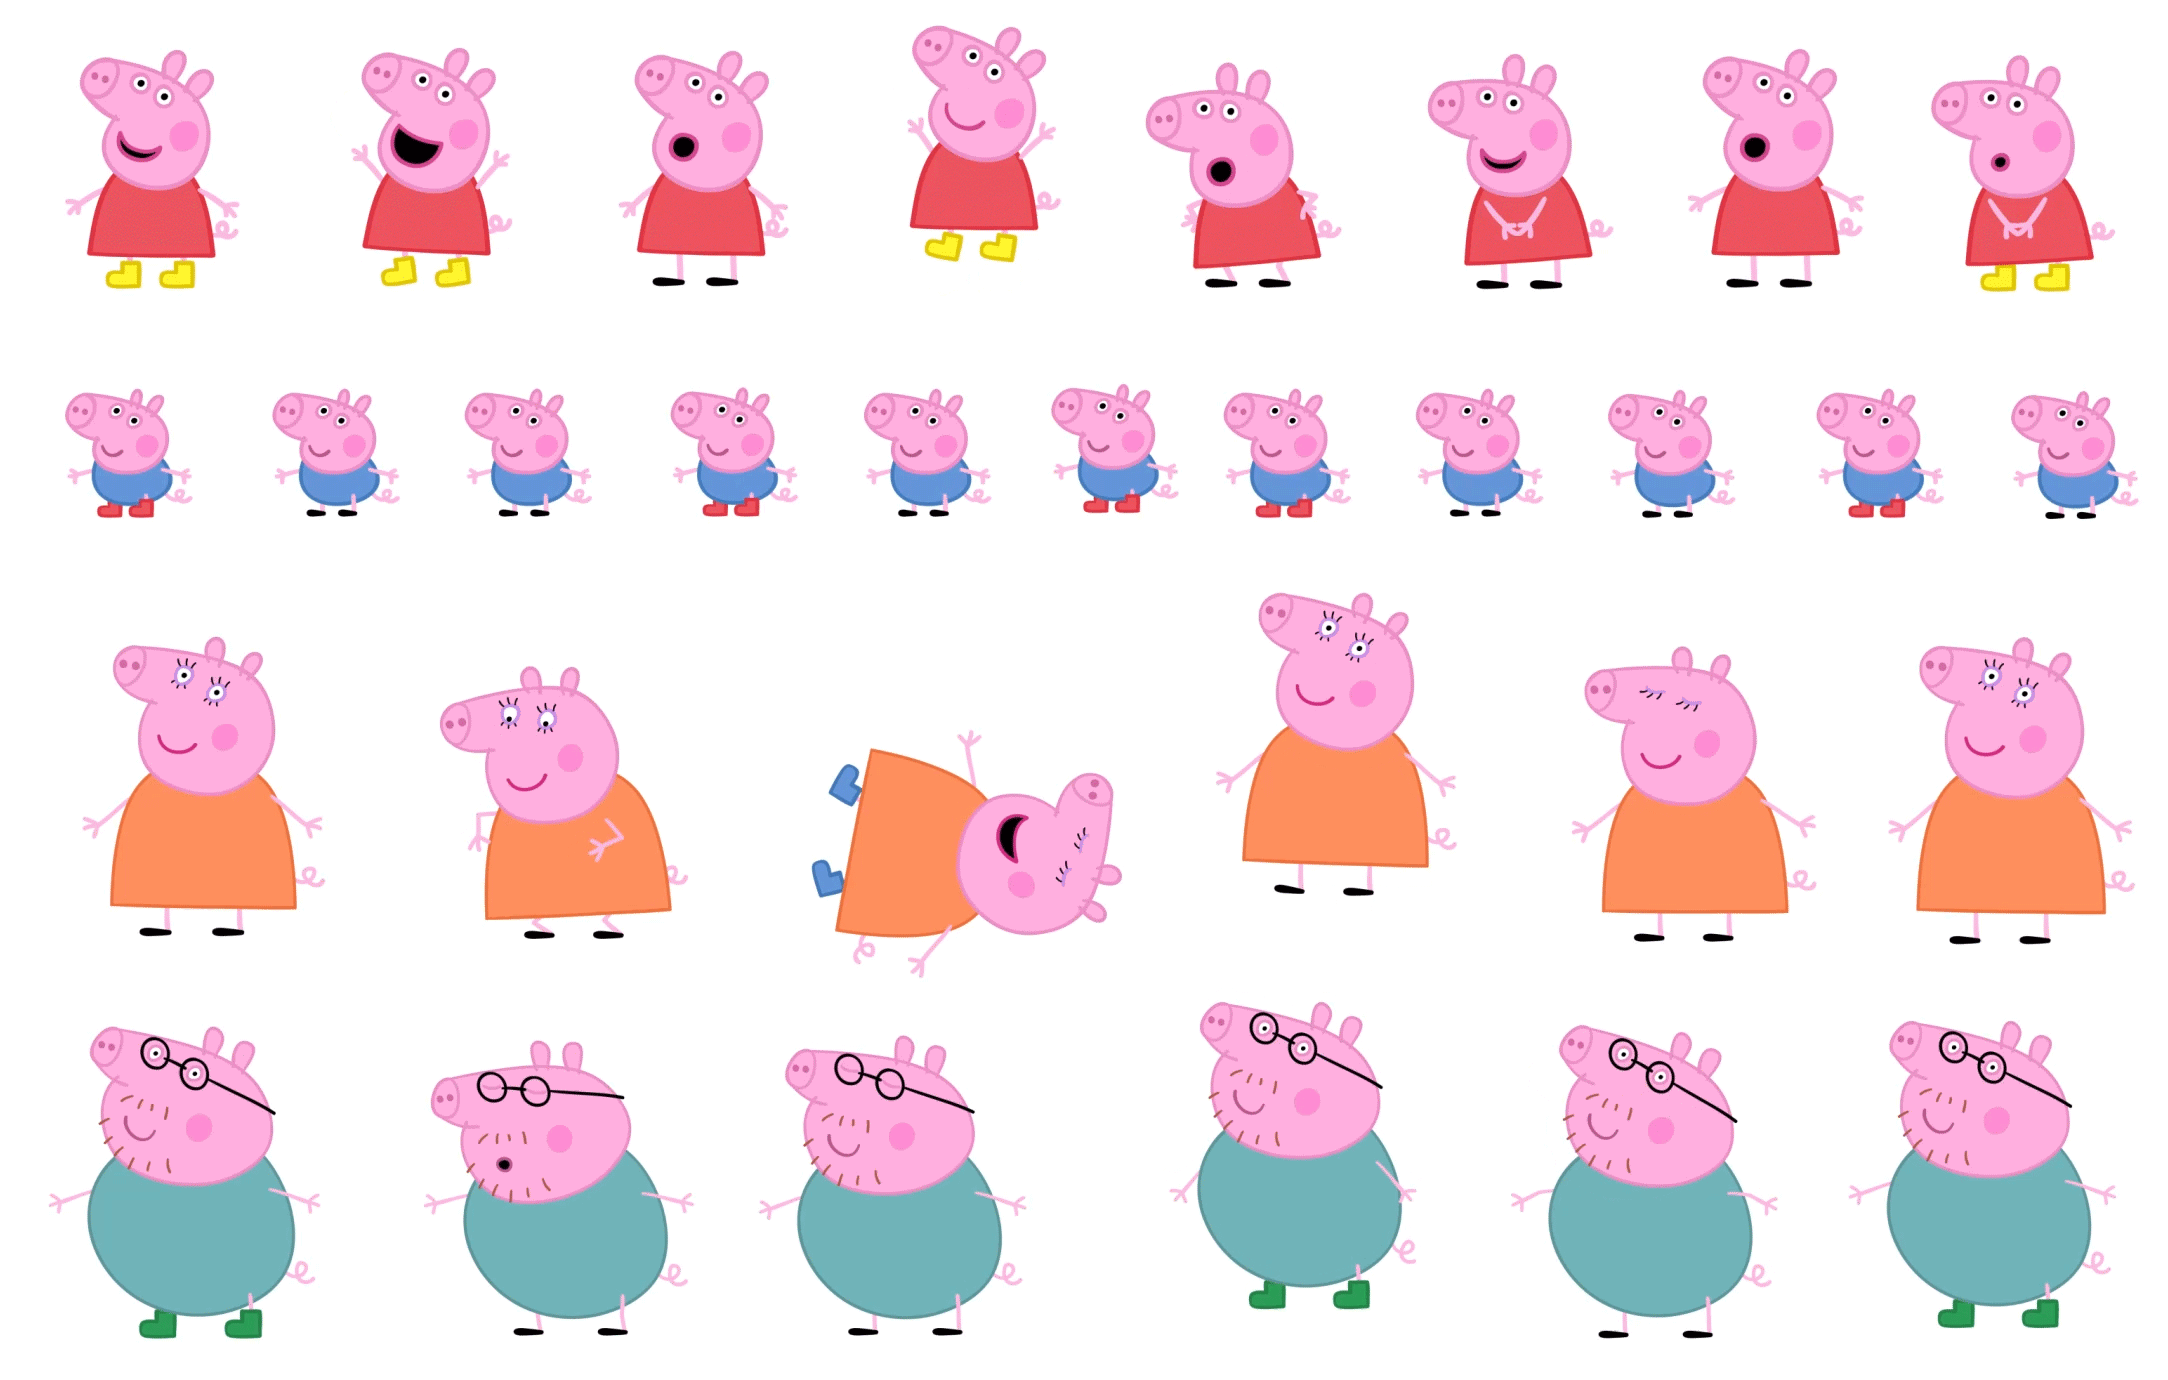 Peppa Pig animations